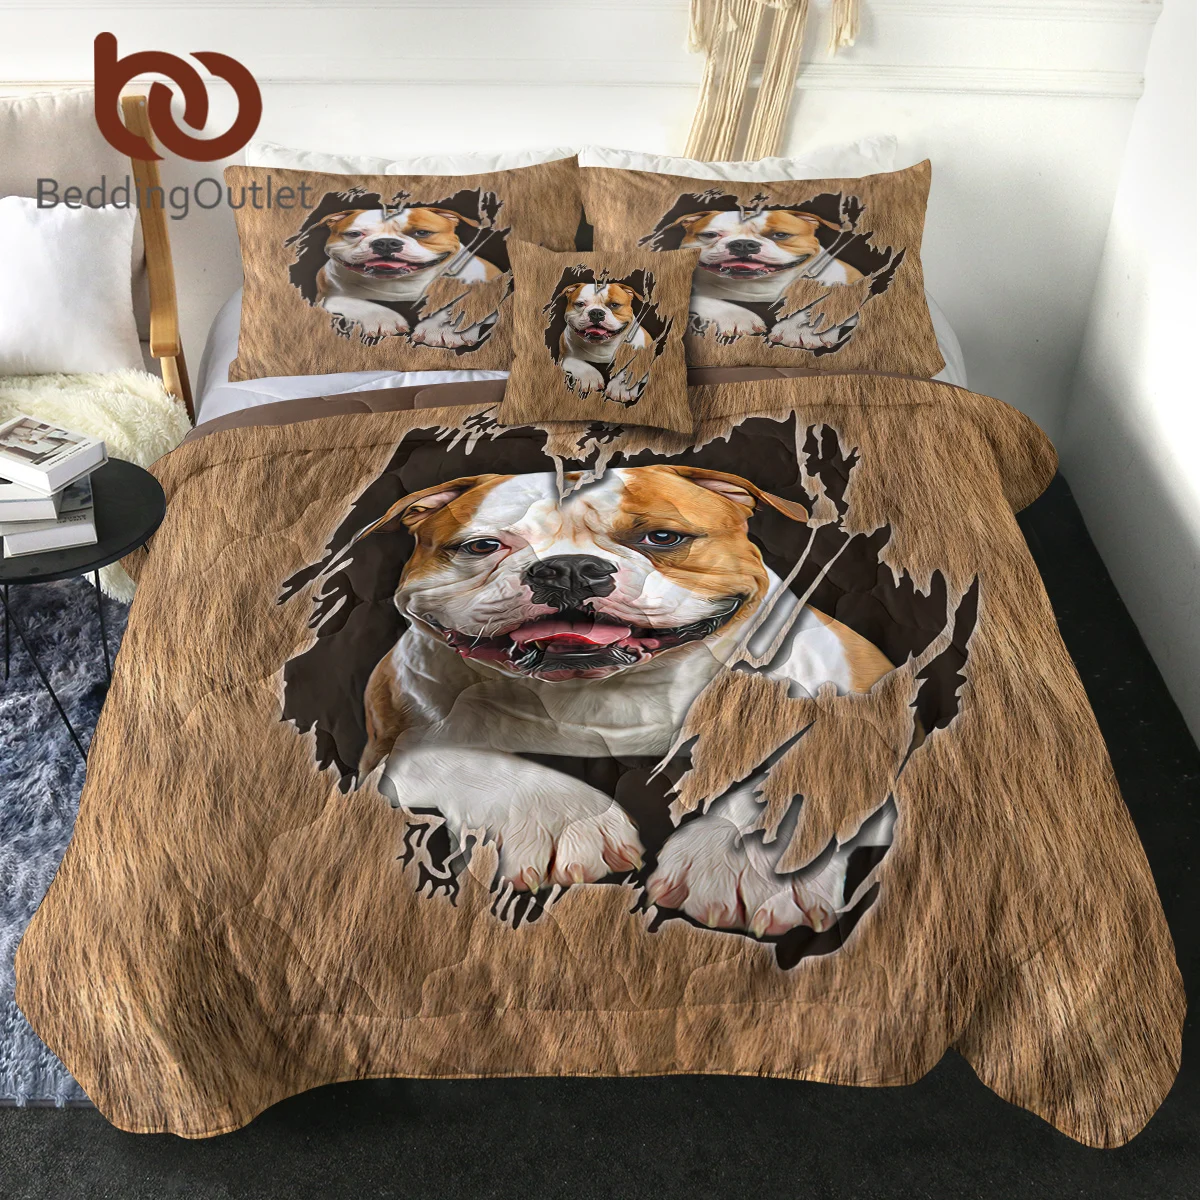 

BeddingOutlet Lovely Pug Bedding Set Kawaii Dog Animal Fur Plank Pattern Comforter Pilow Shams With Cushion Cover For Home Decor